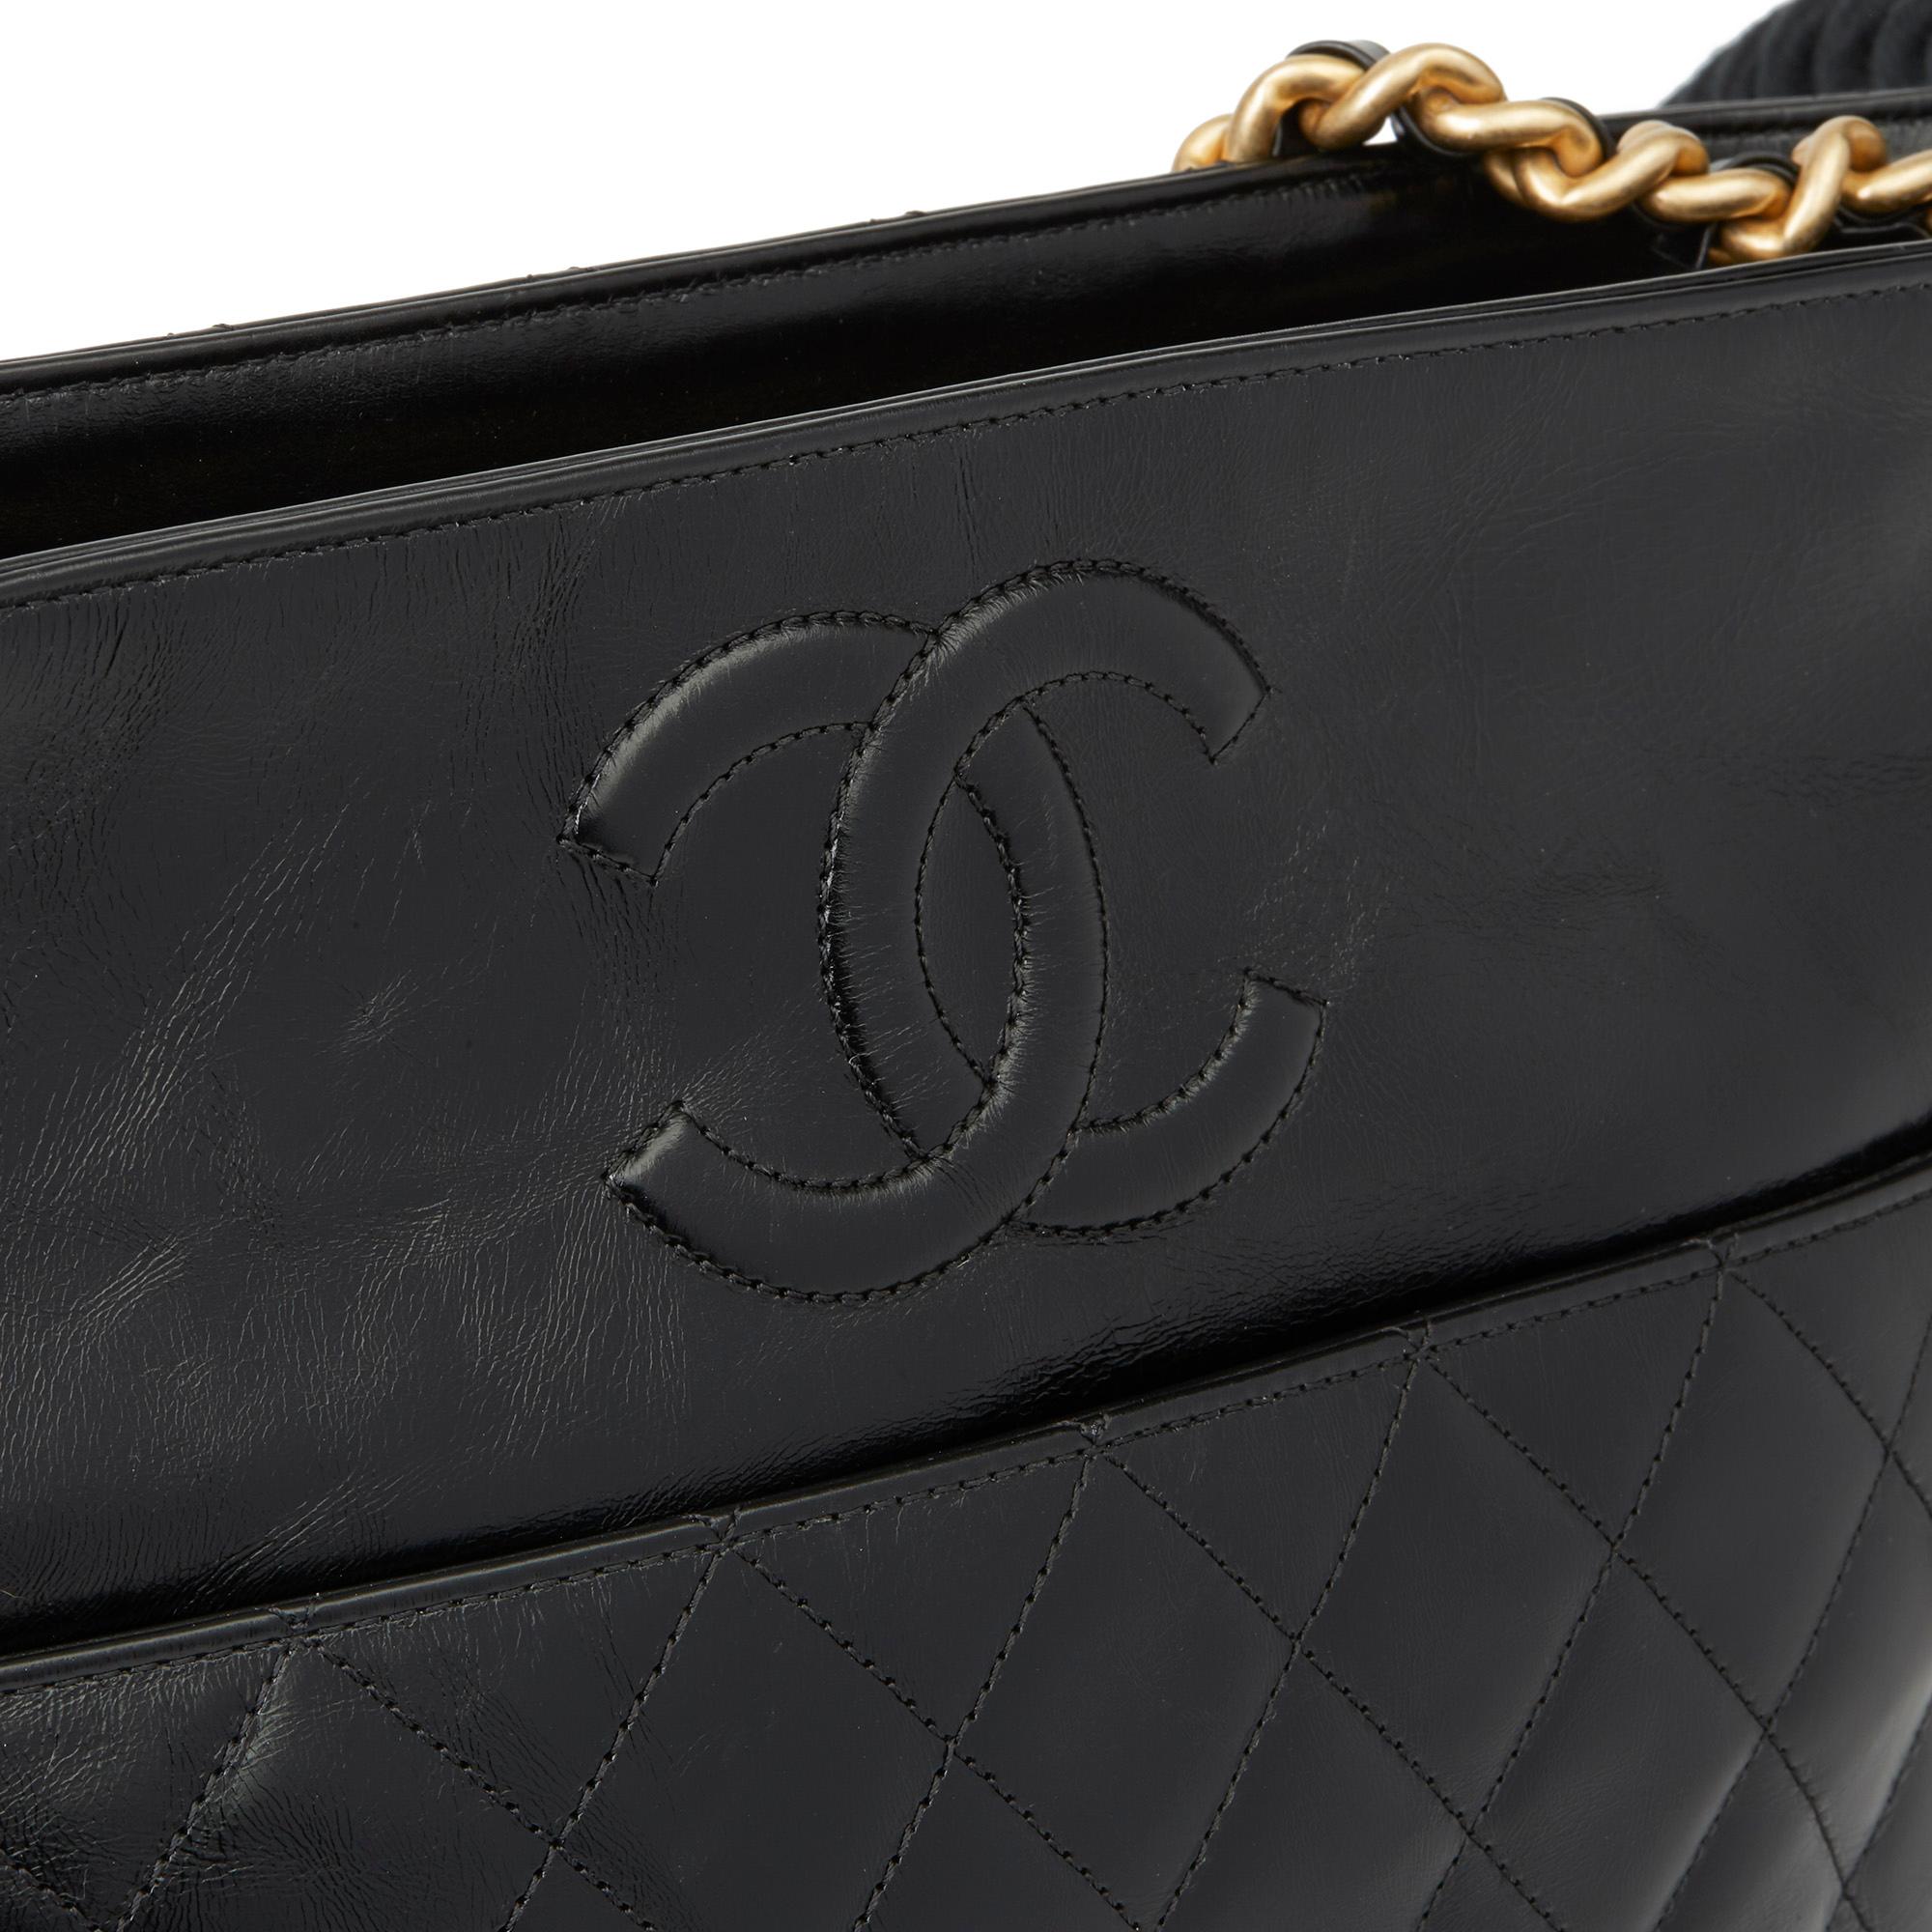 Women's 2019 Chanel Black Quilted Aged Calfskin Leather En Vogue Hobo Bag 